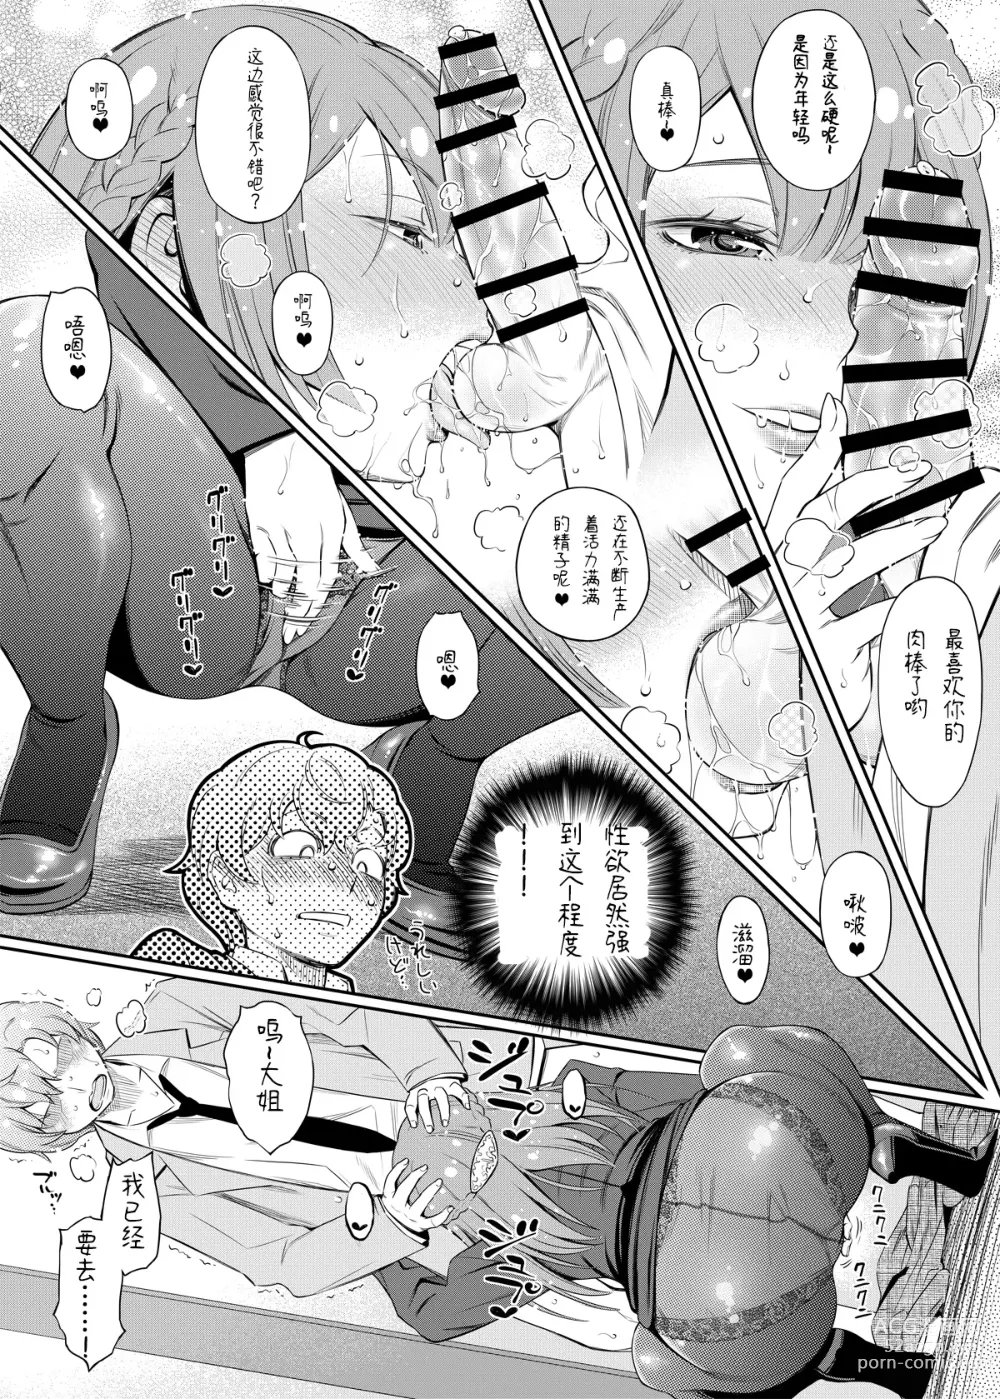 Page 3 of doujinshi Konoha-san 27-sai Pet o Kau